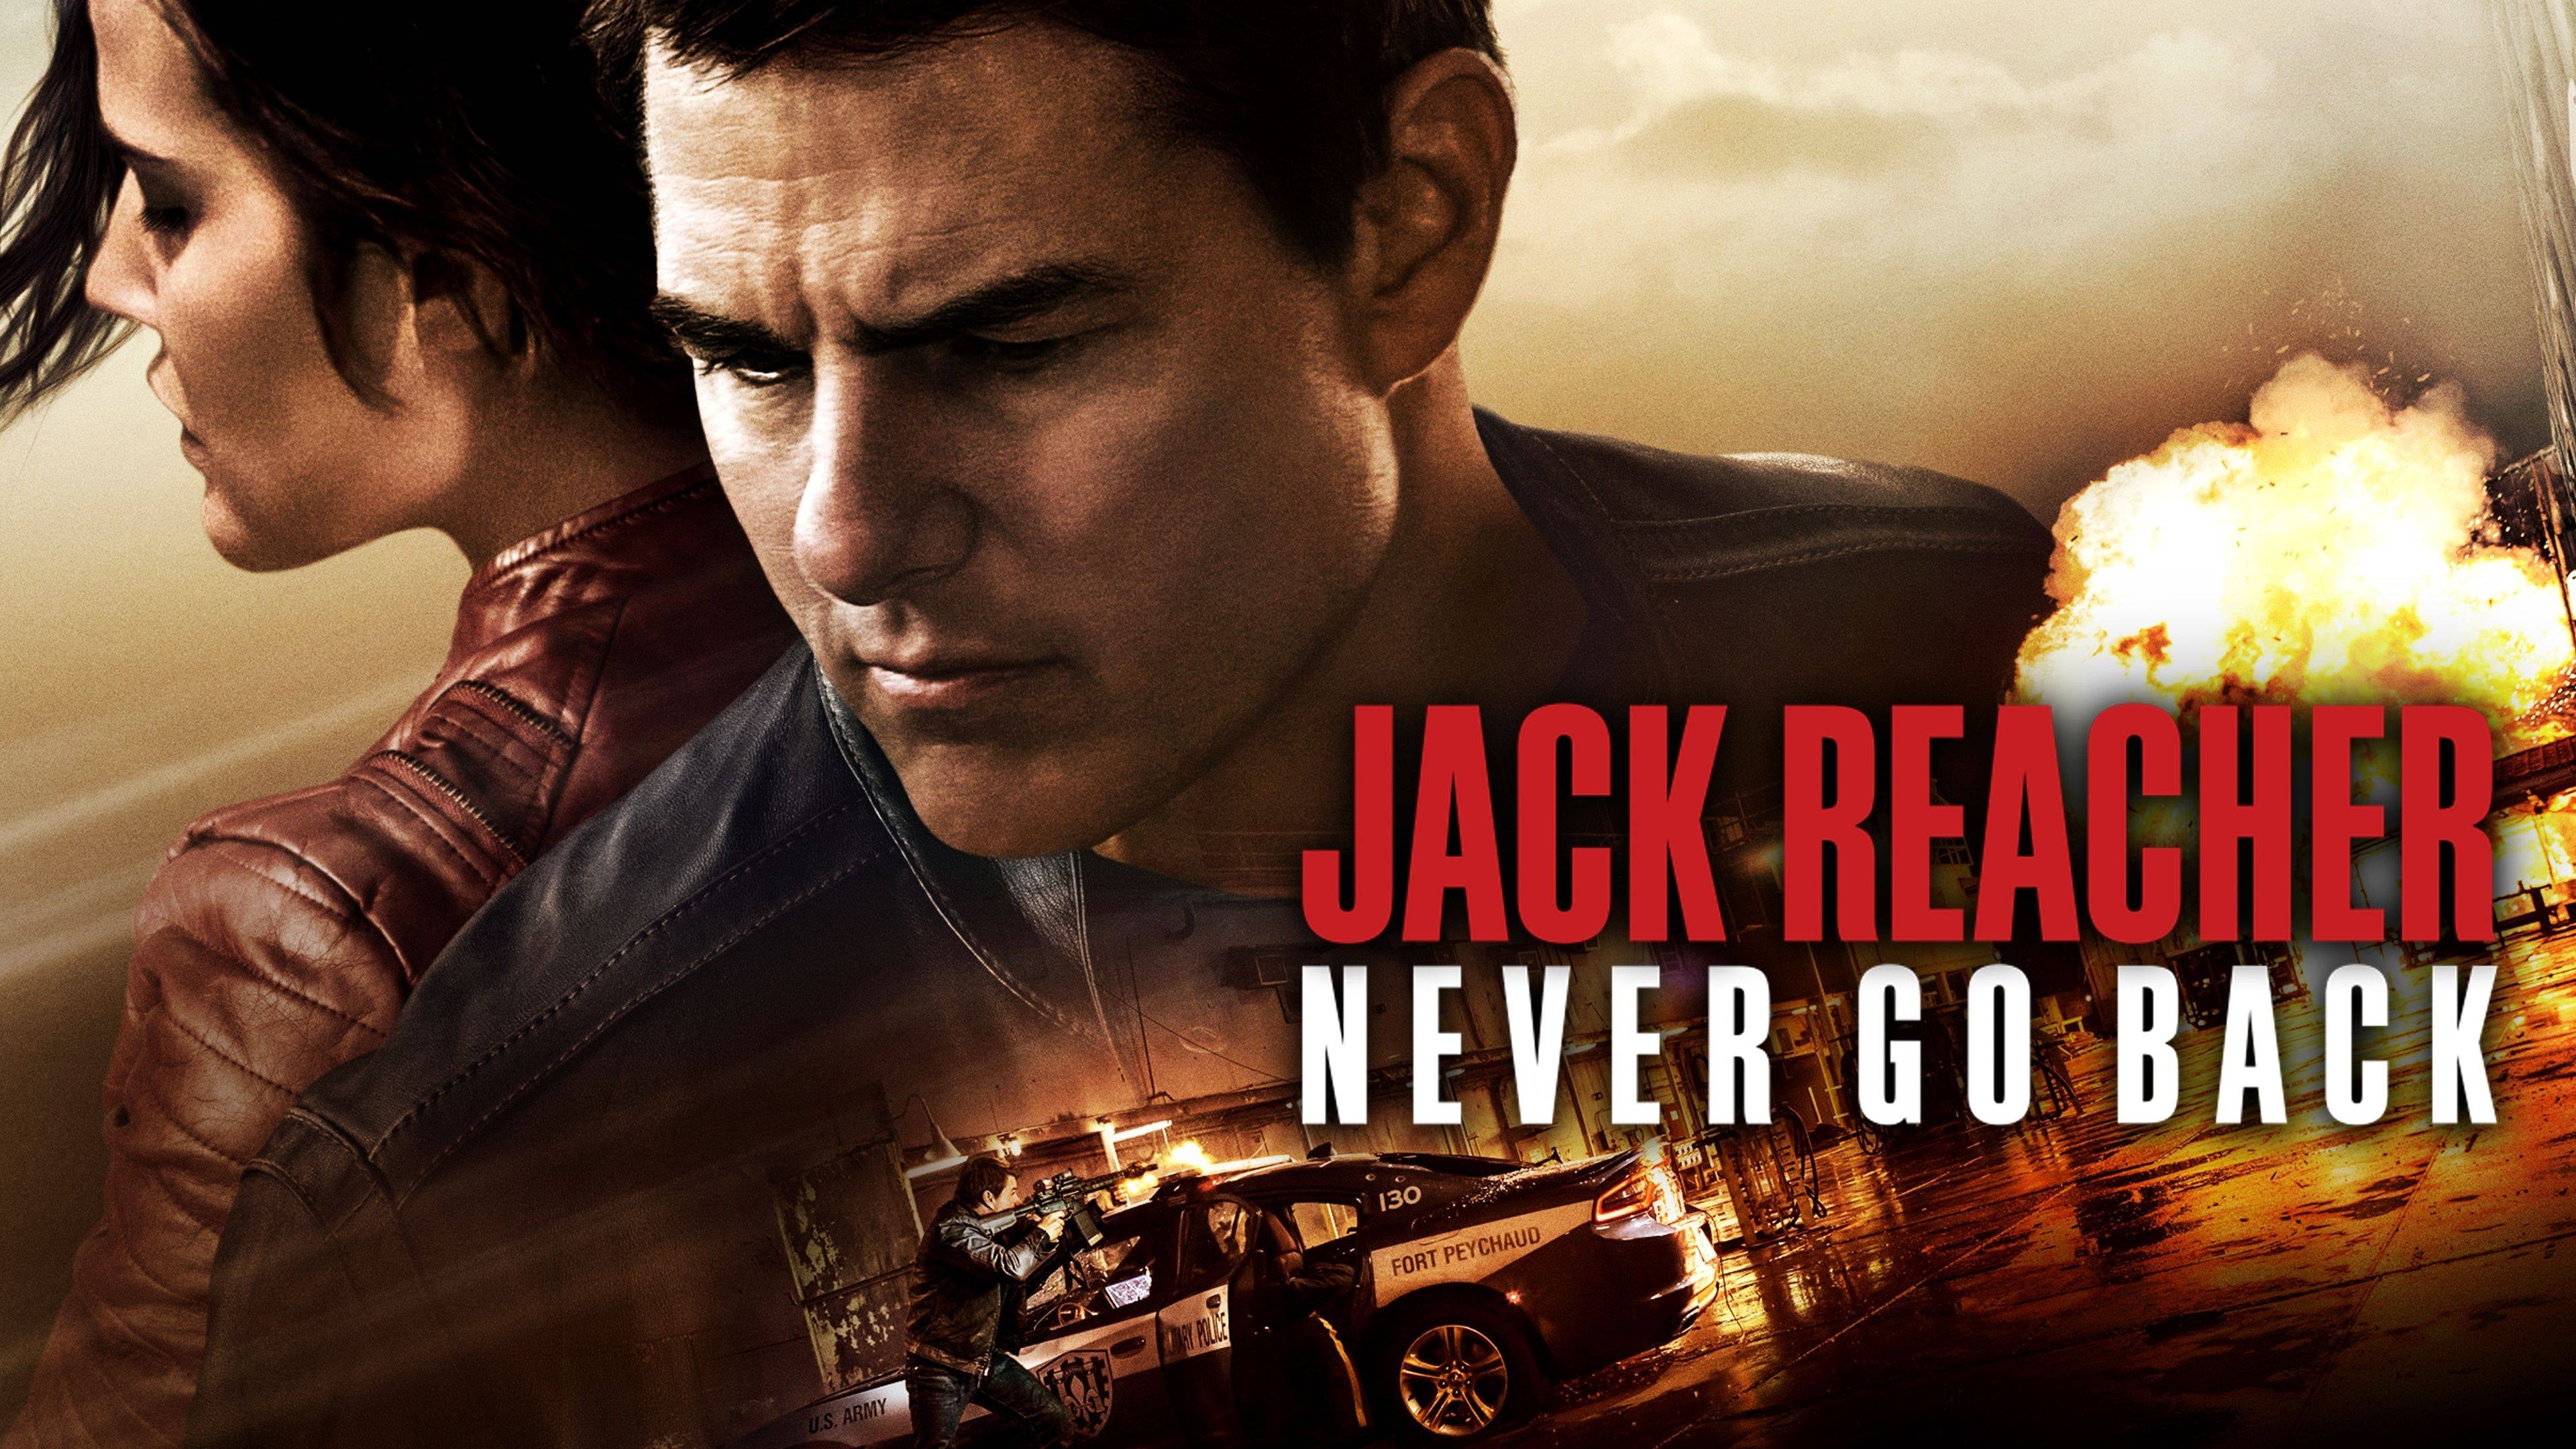 Watch Jack Reacher: Never Go Back Full Movie Online Free. 